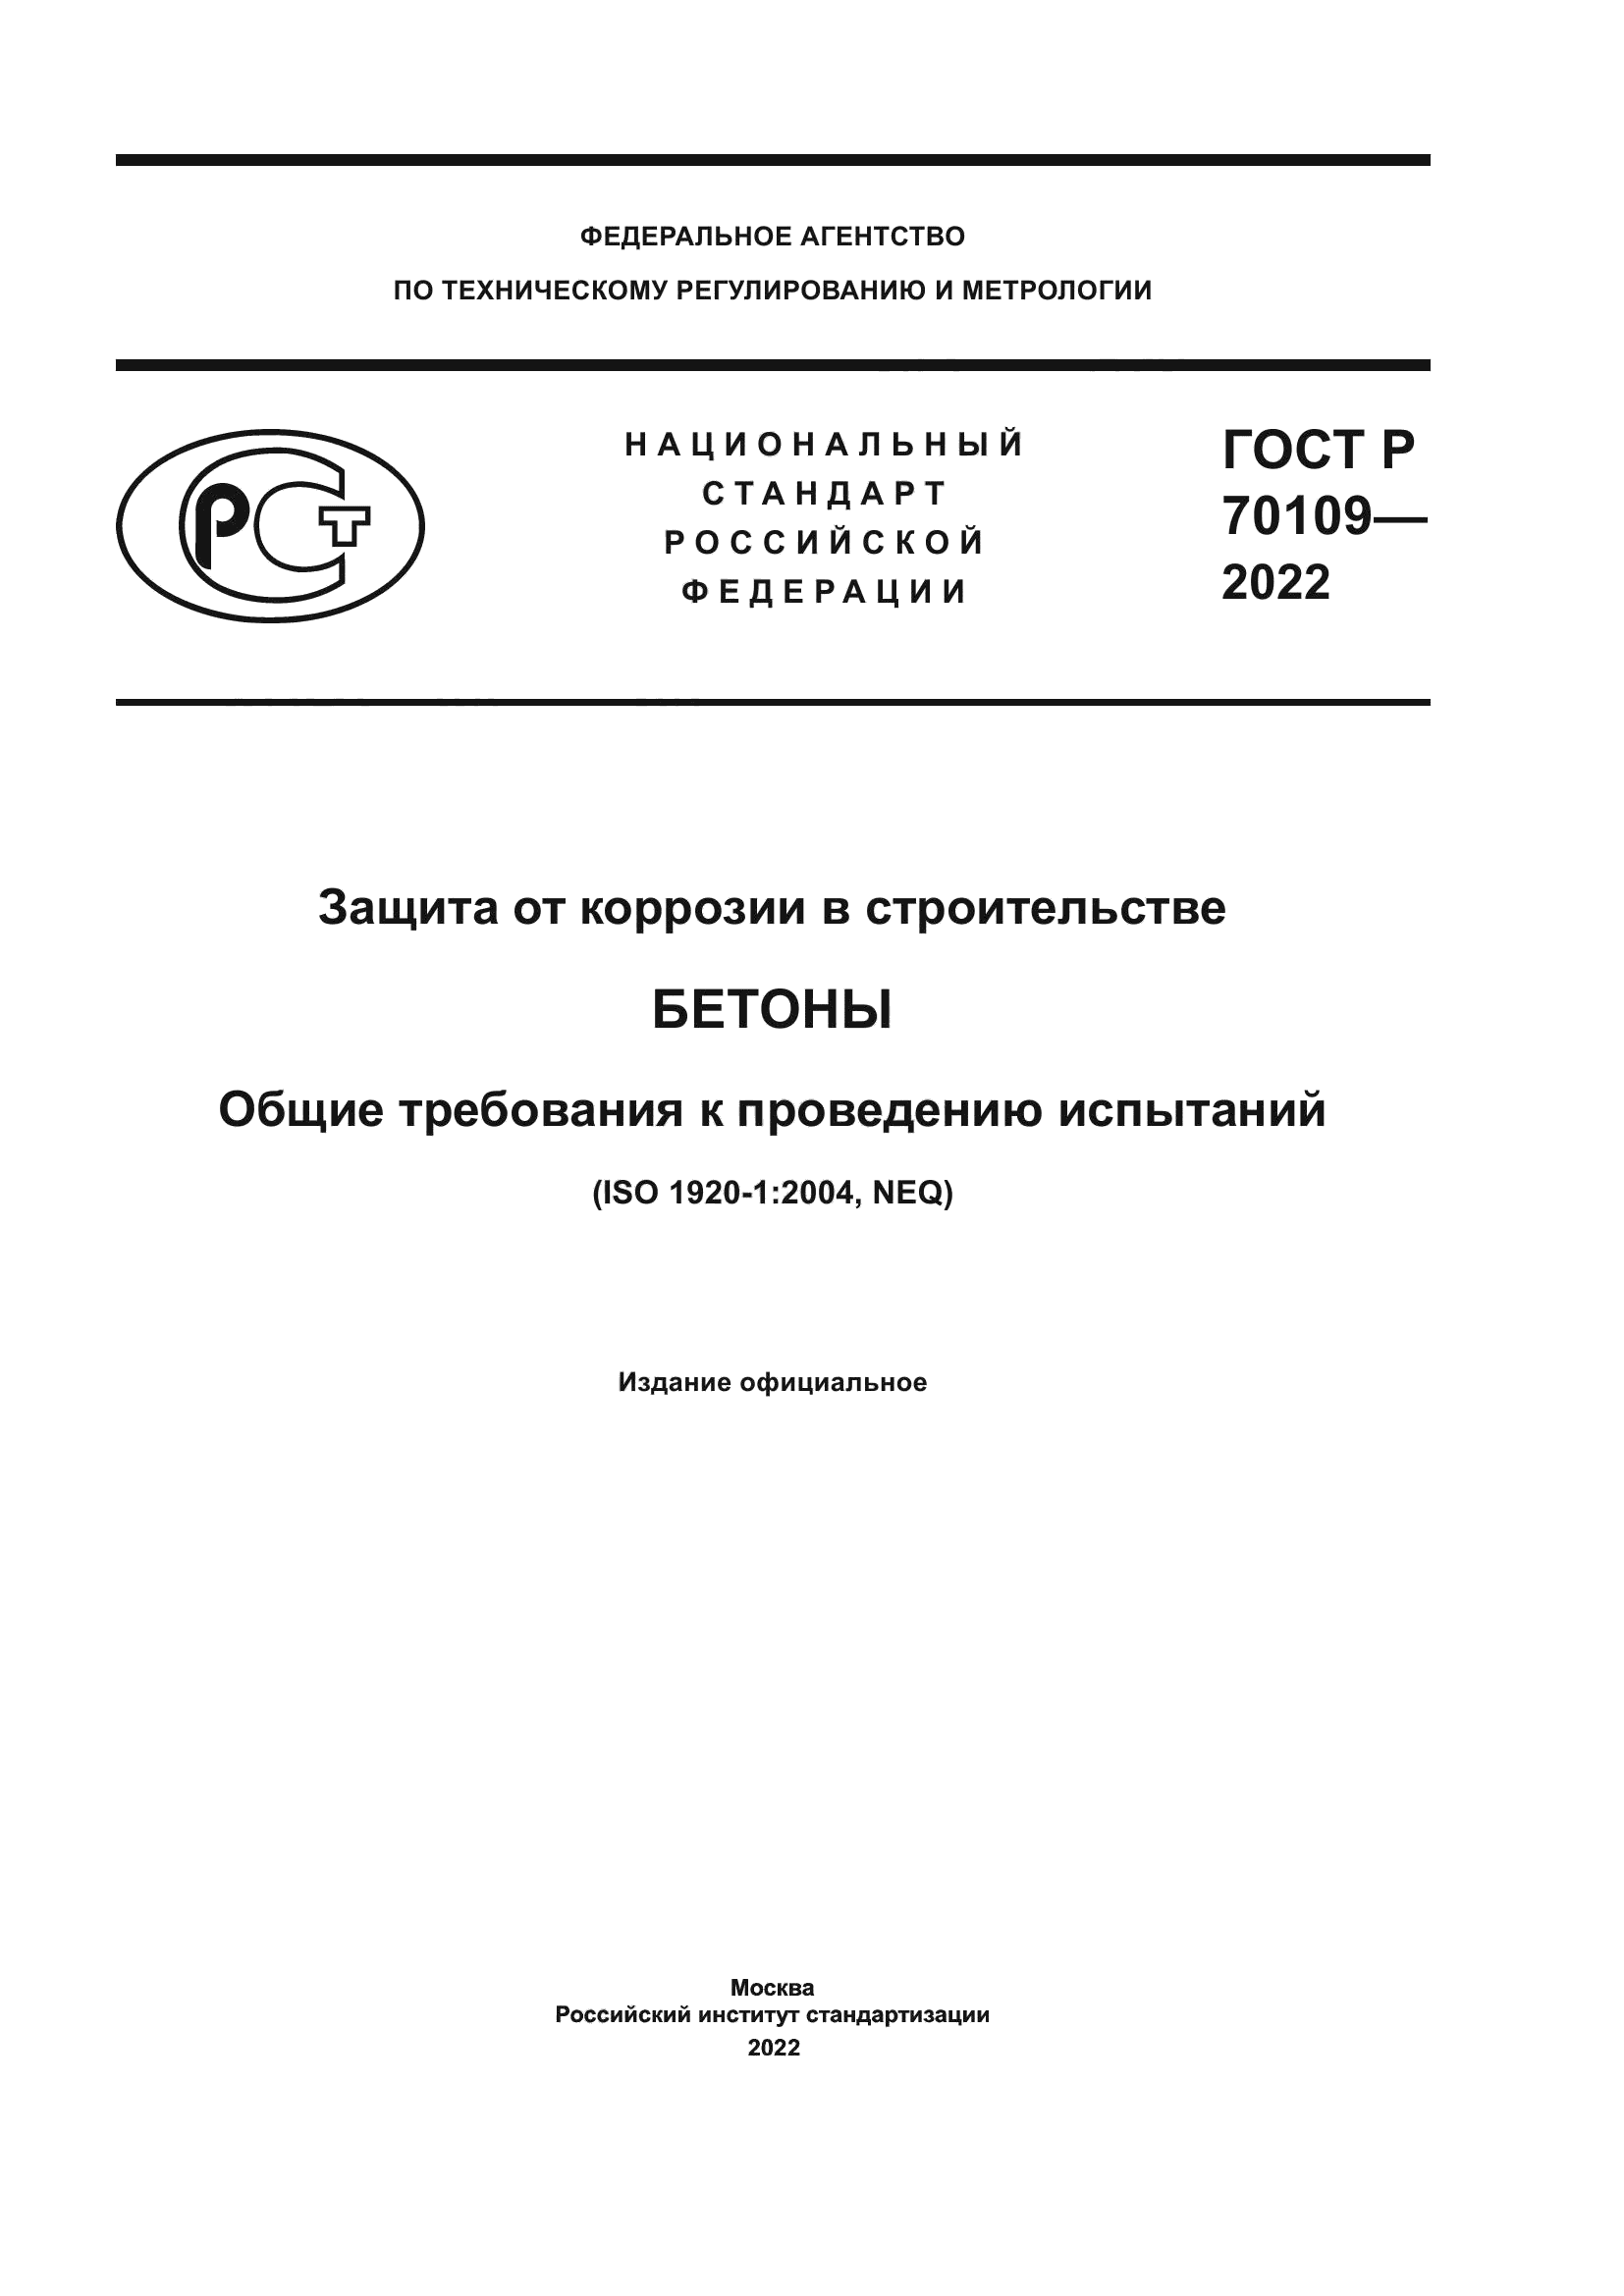 ГОСТ Р 70109-2022